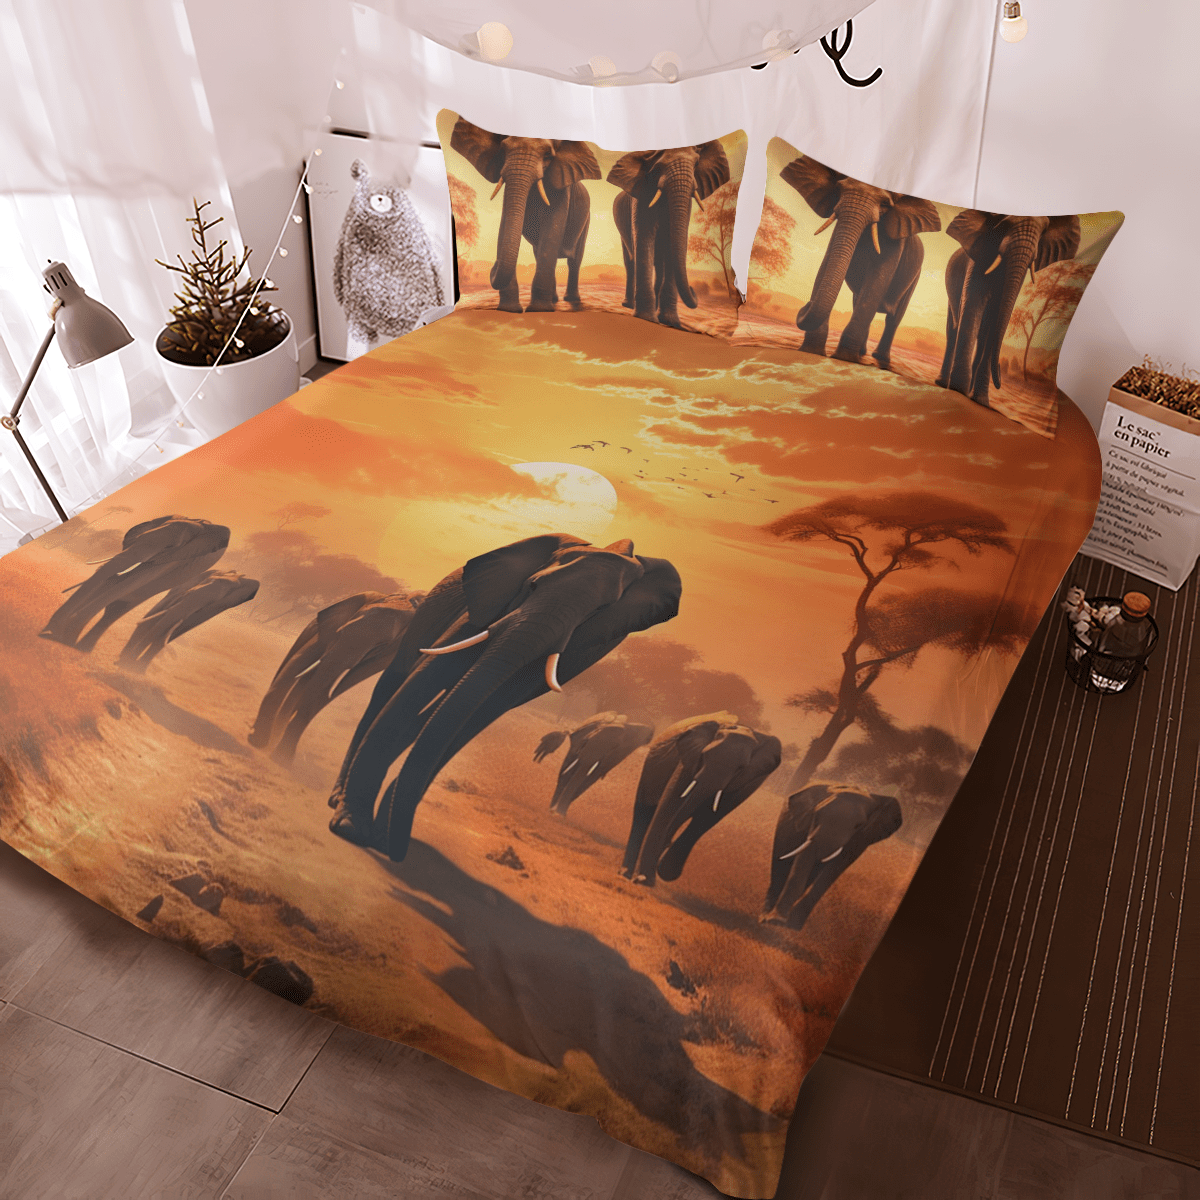 Elephant Bedding Set - Elephant Duvet Cover & Pillow Case